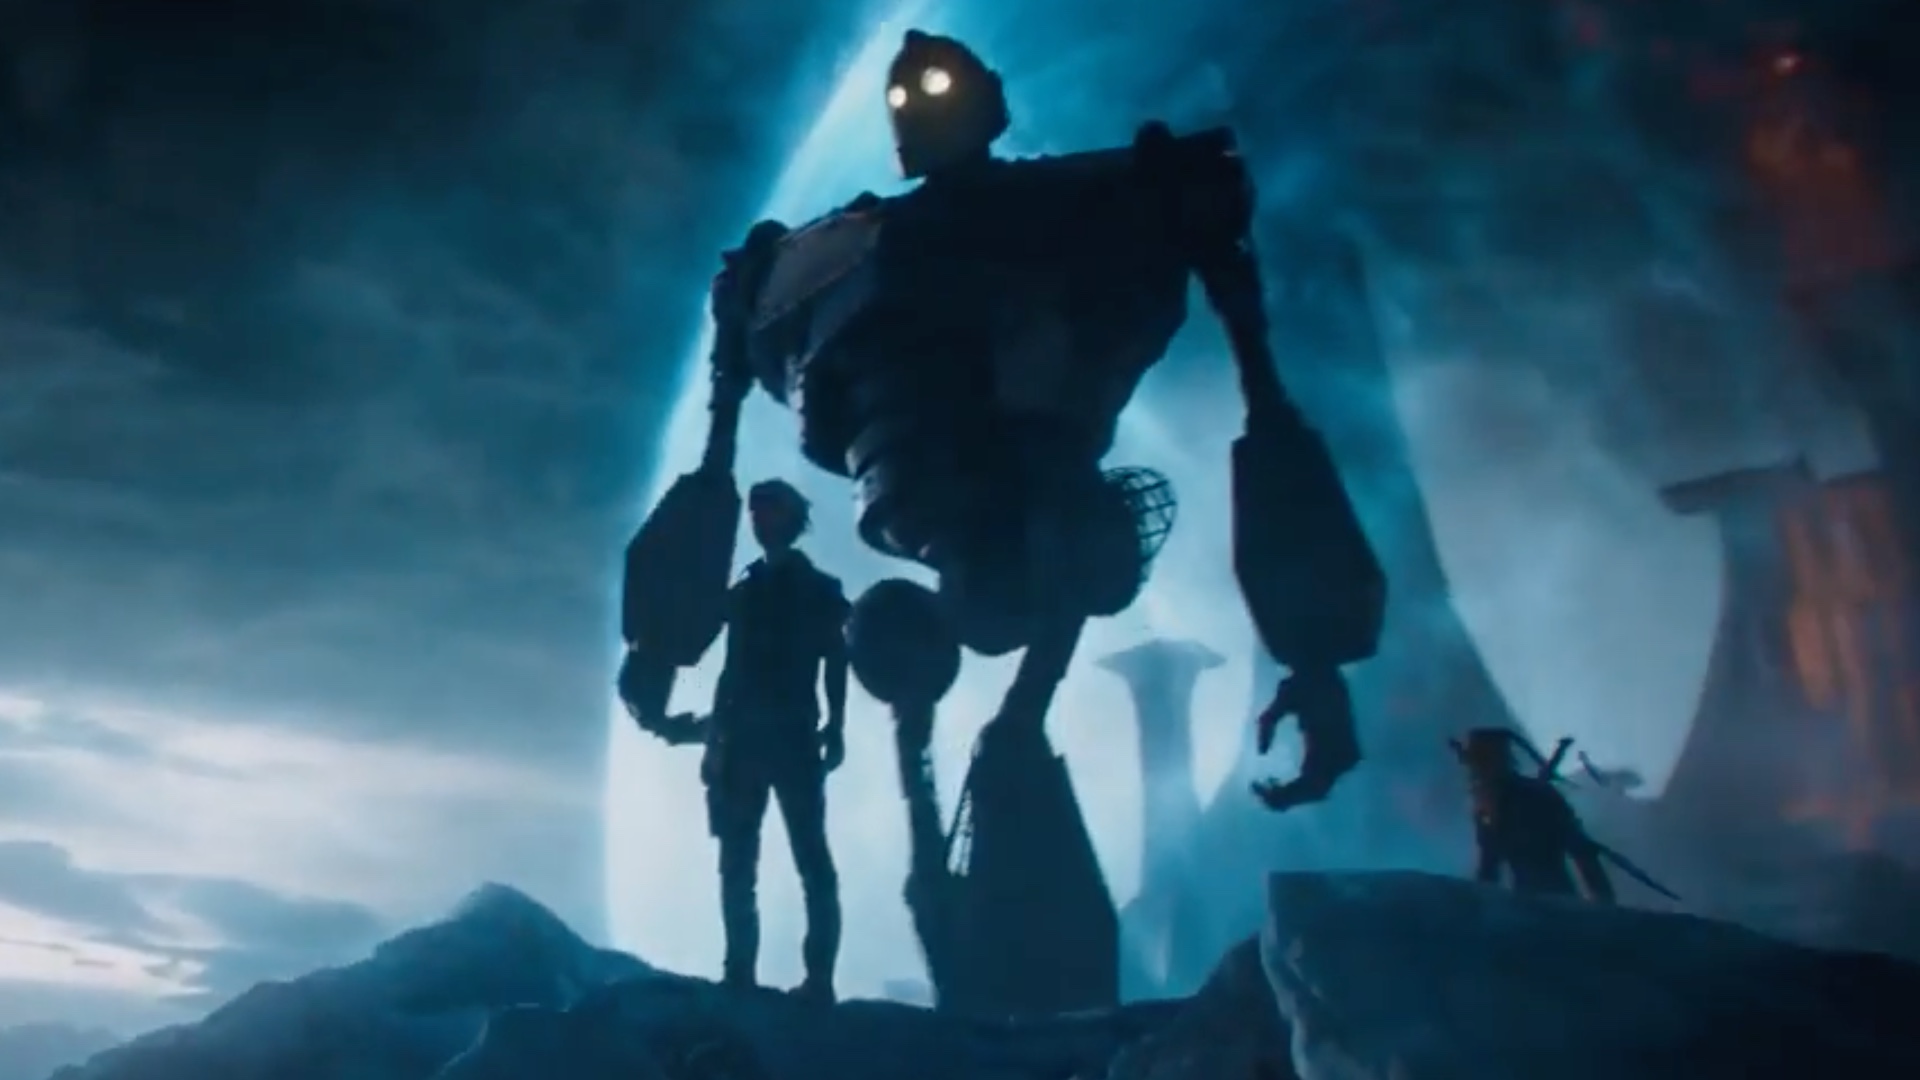 Ready Player One Official Comic Con Trailer (2018) Steven Spielberg Sci-Fi  Movie HD 